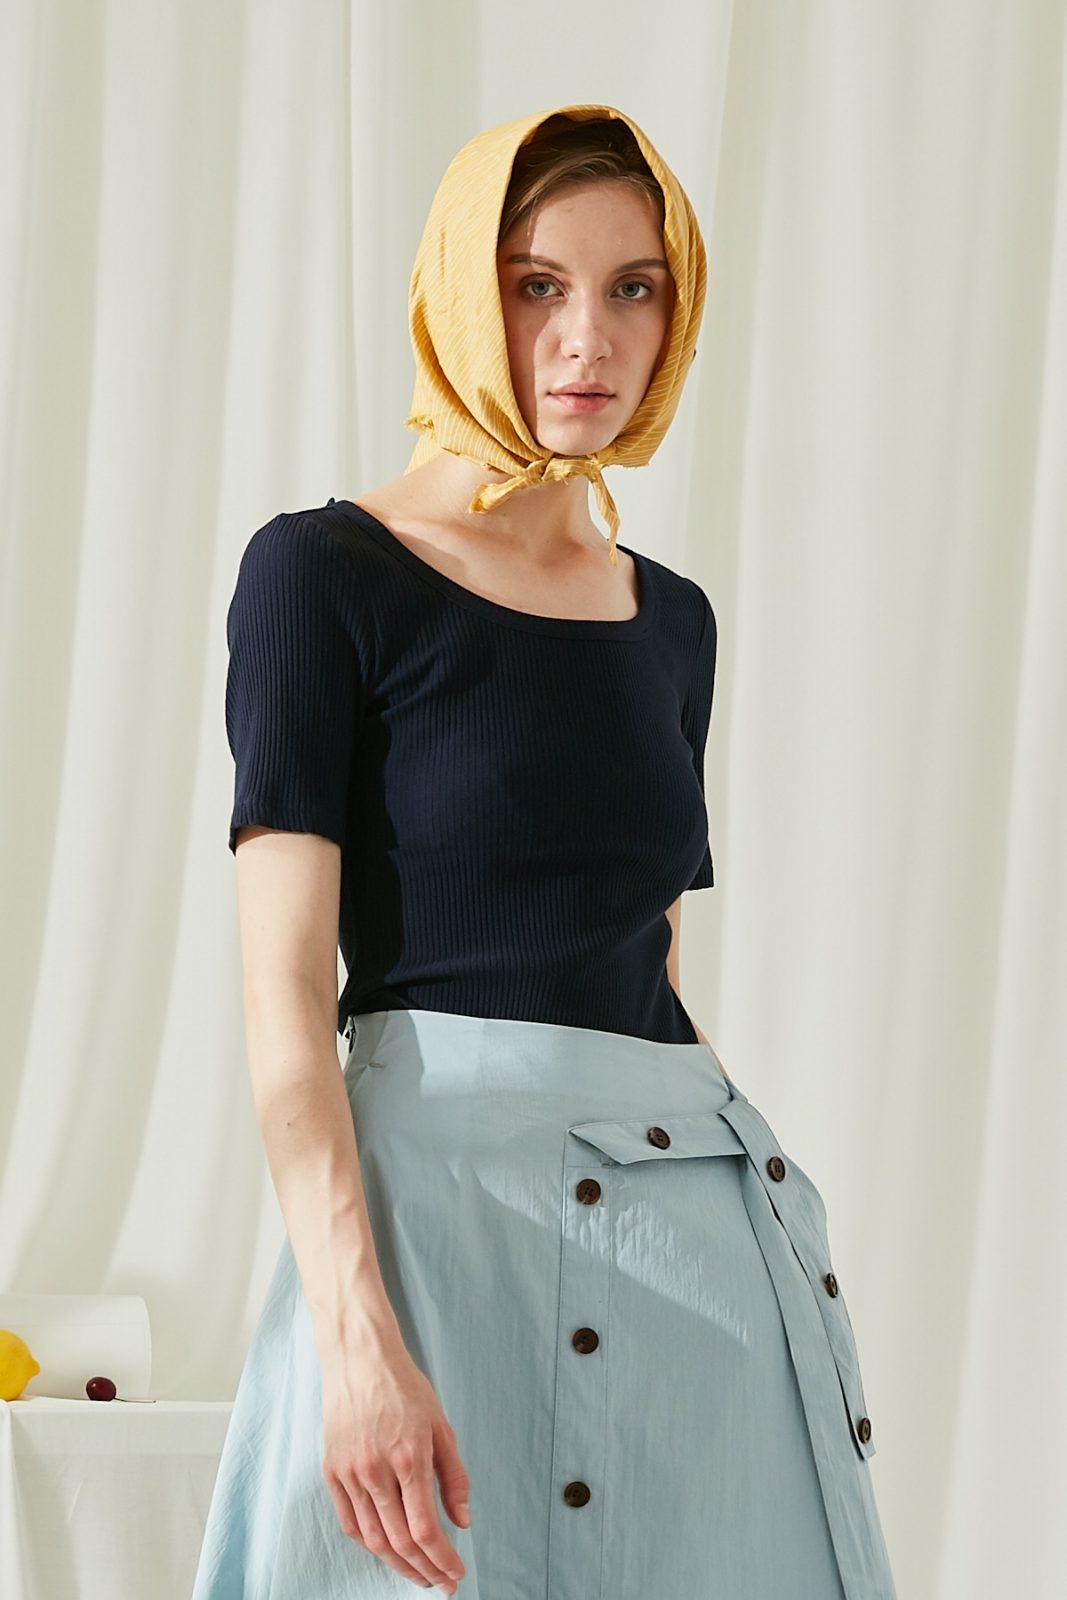 SKYE San Francisco SF ethical modern minimalist quality women clothing fashion Elissa Stretch Knit Cotton Top blue 2